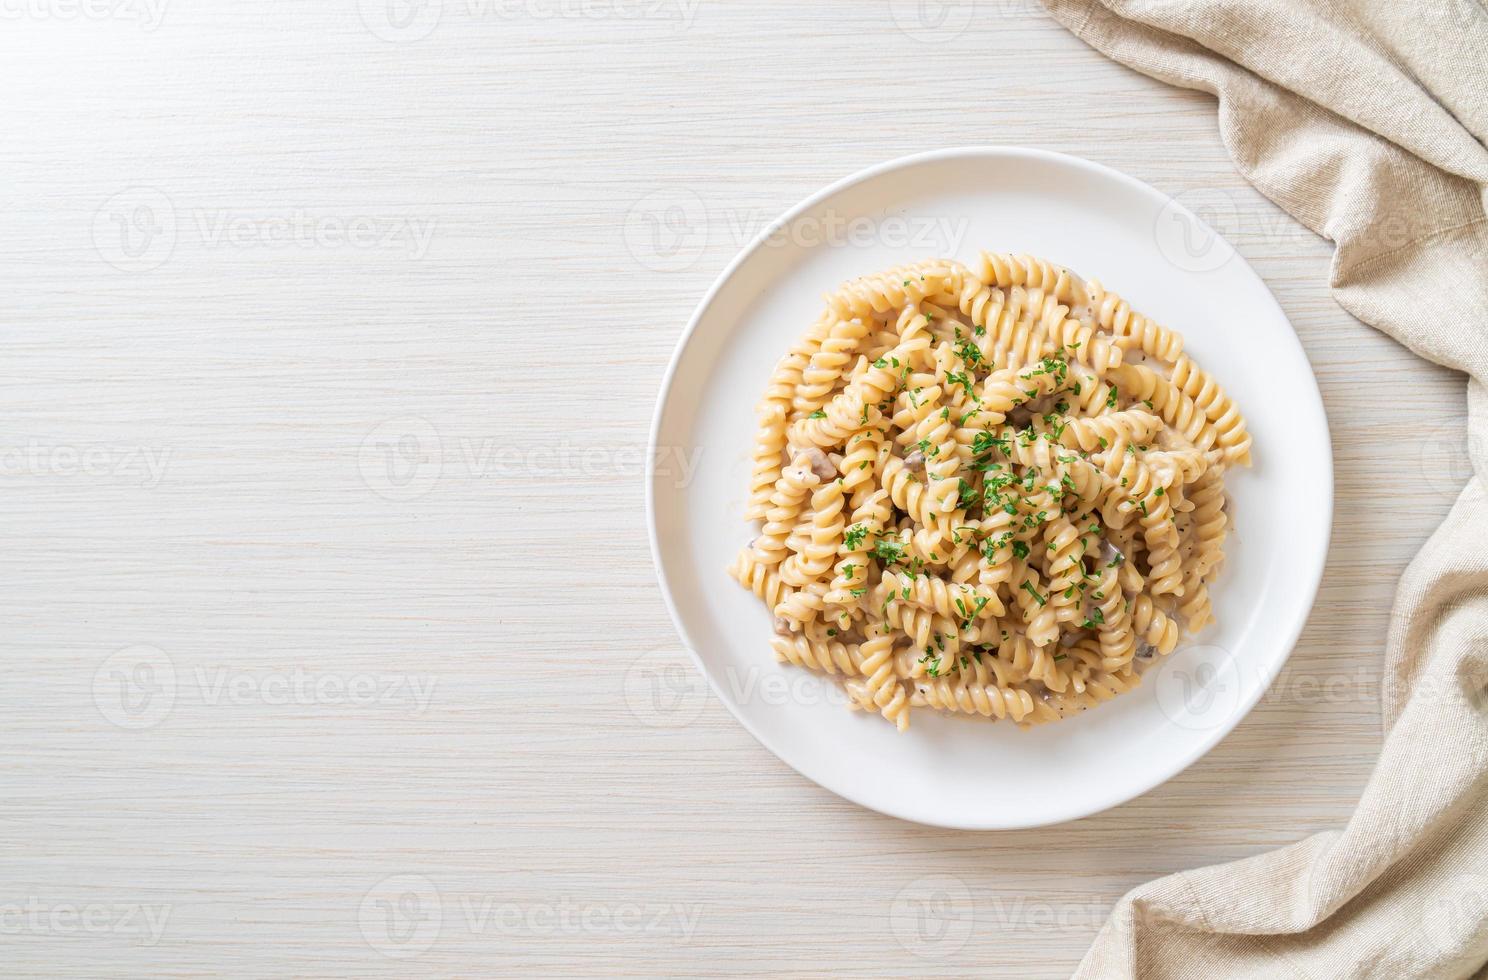 Spirali or spiral pasta mushroom cream sauce with parsley - Italian food style photo